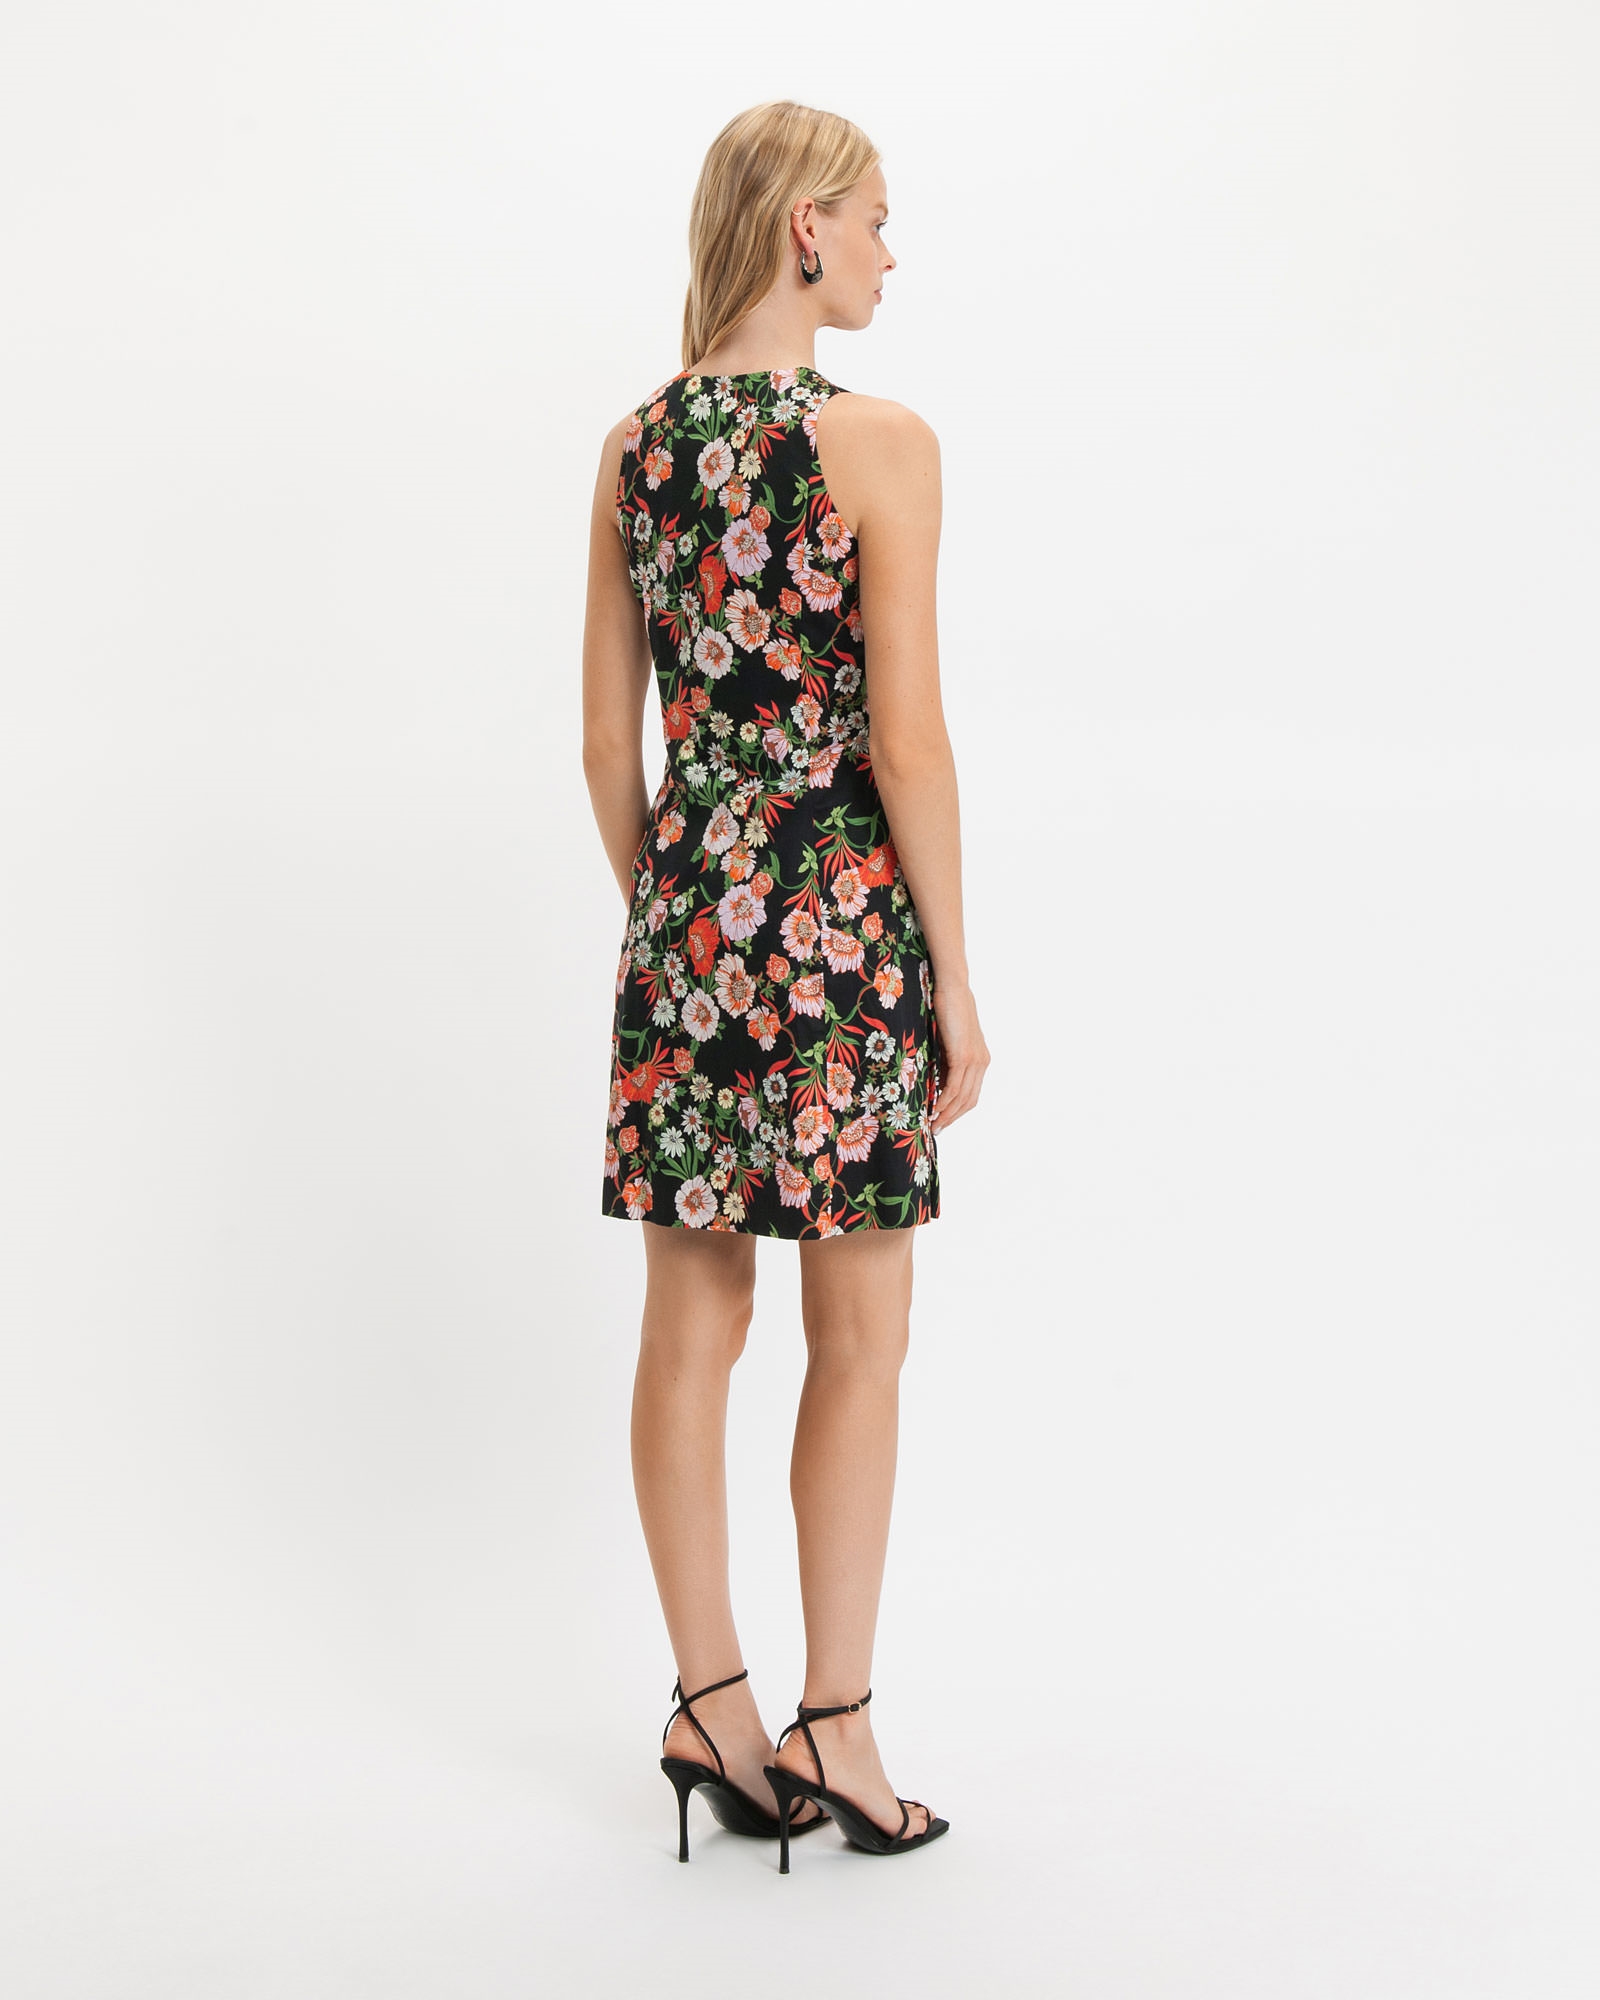 Floral Sateen Zip Front Dress | Buy Dresses Online - Cue